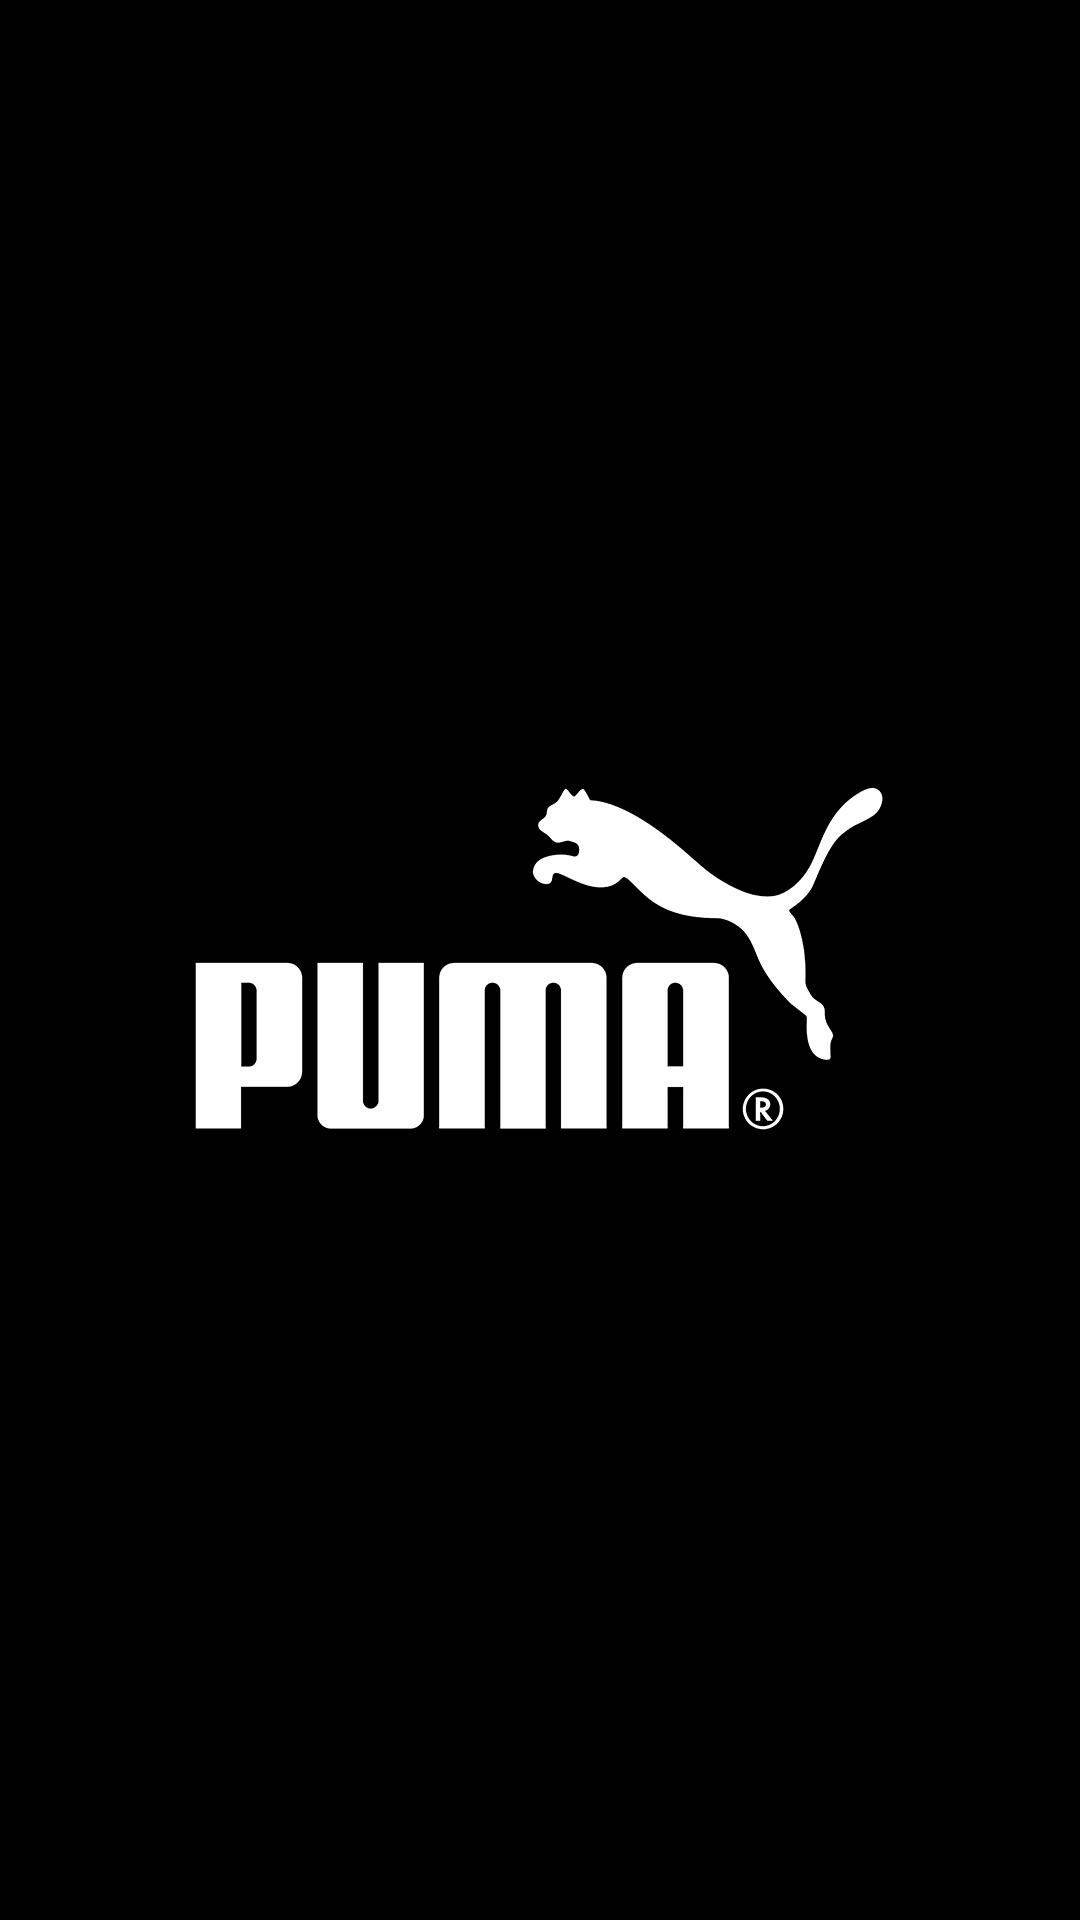 Iconic Puma Brand Logo Wallpaper